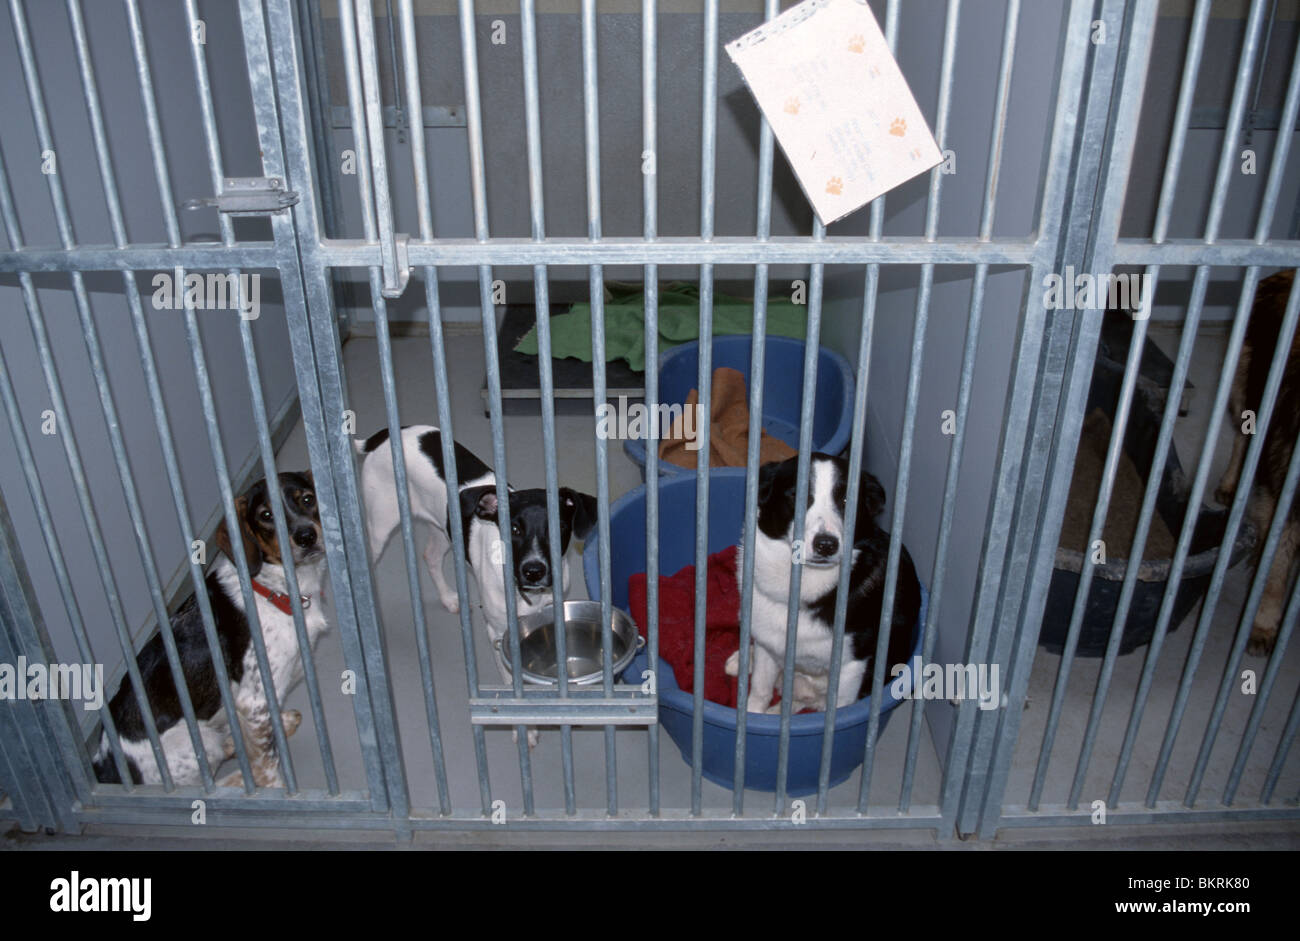 Abandoned dogs waiting for adoption in animal shelter Stock Photo - Alamy